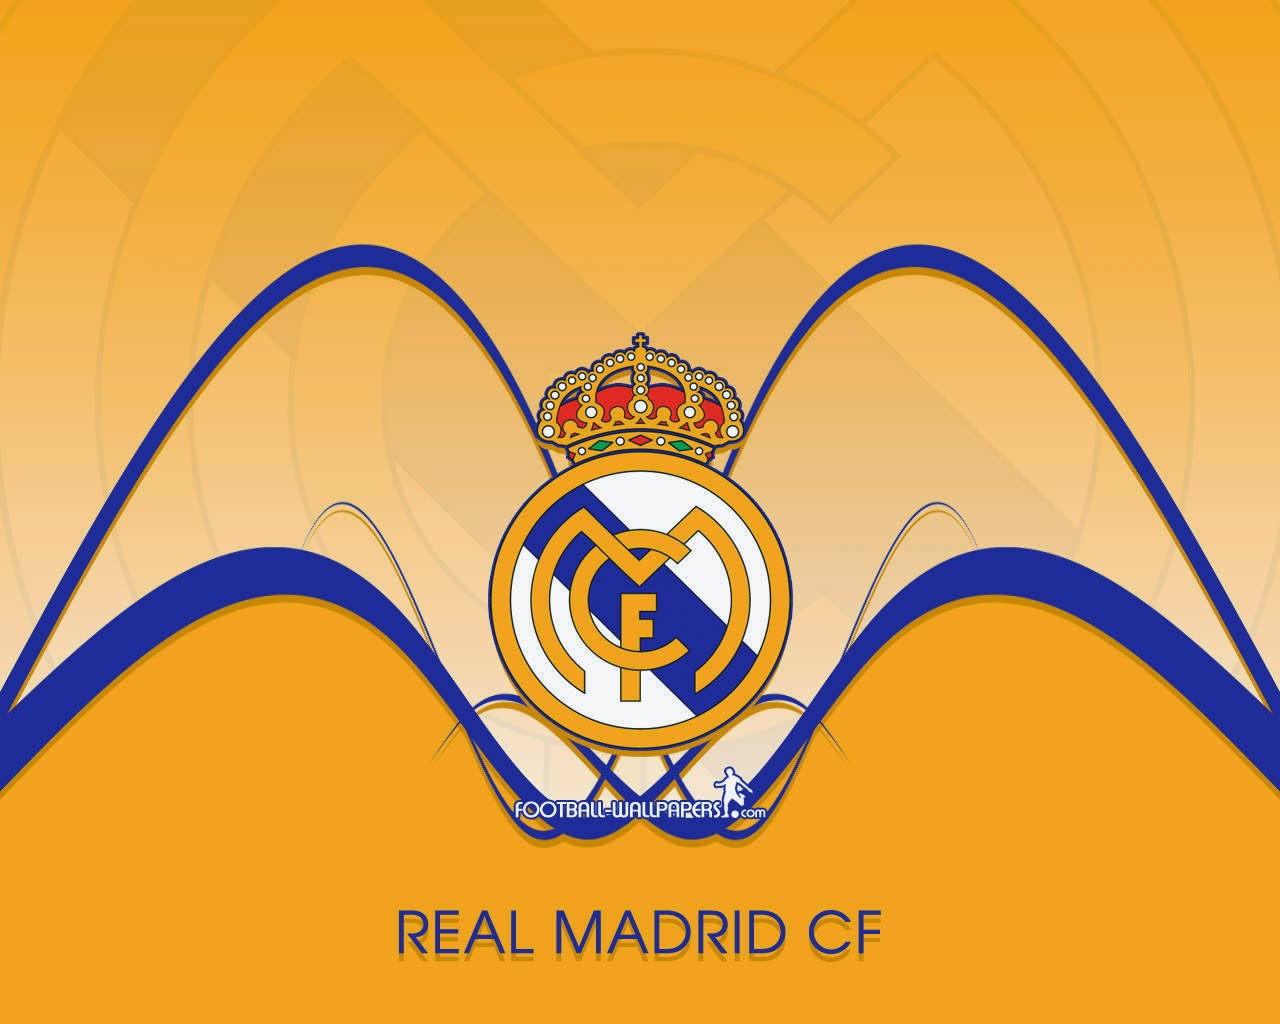 Real Madrid Football Club Wallpapers Wallpapo Wallpapo Wallpapo